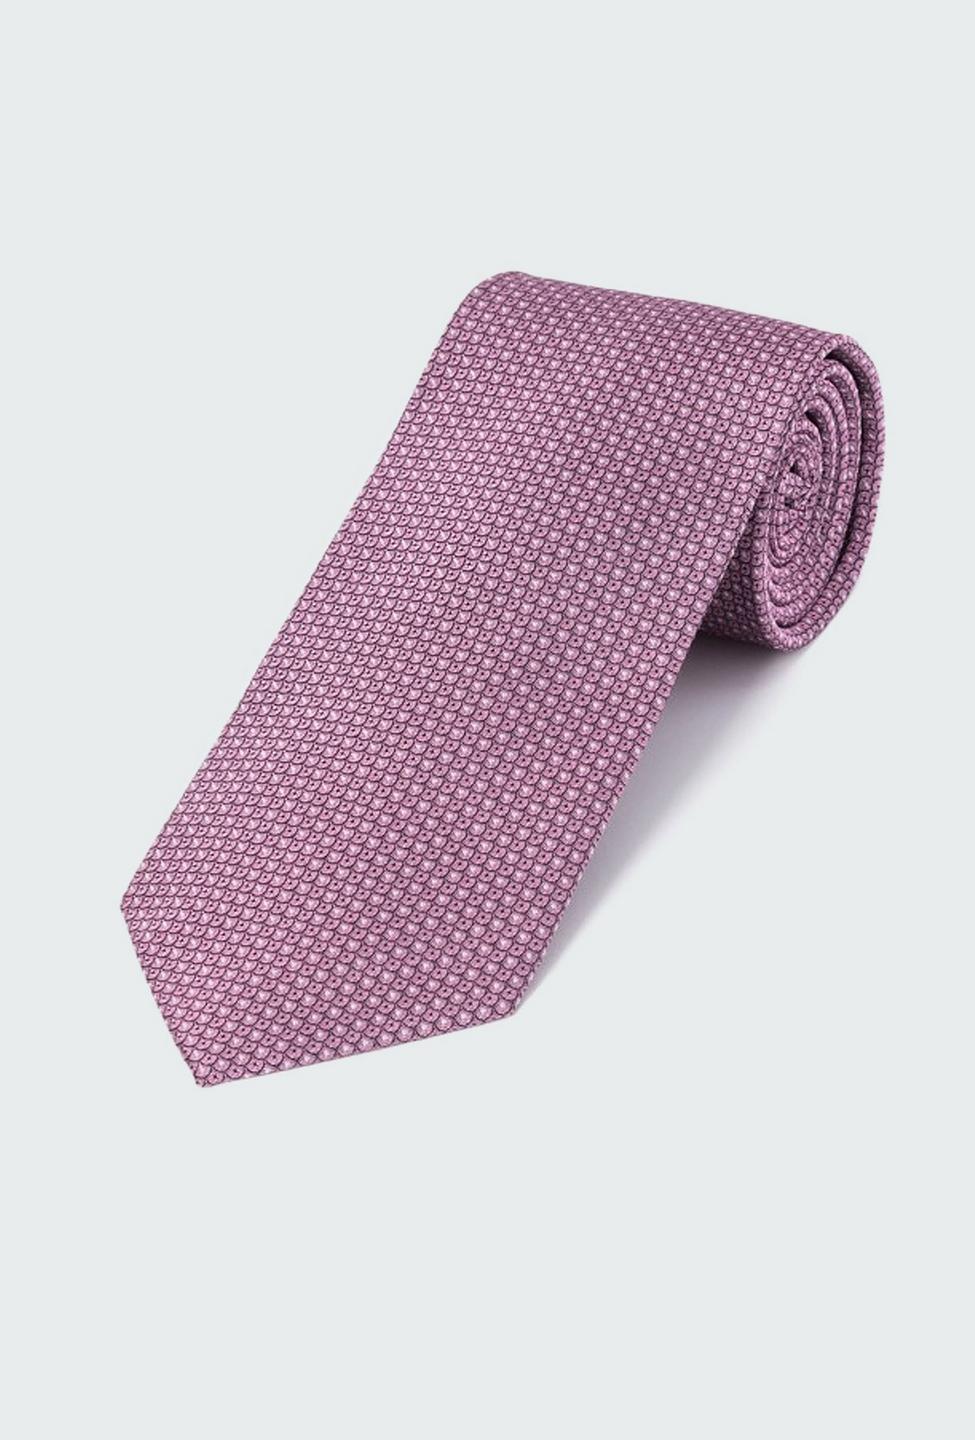 Pink tie - Pattern Design from Premium Indochino Collection